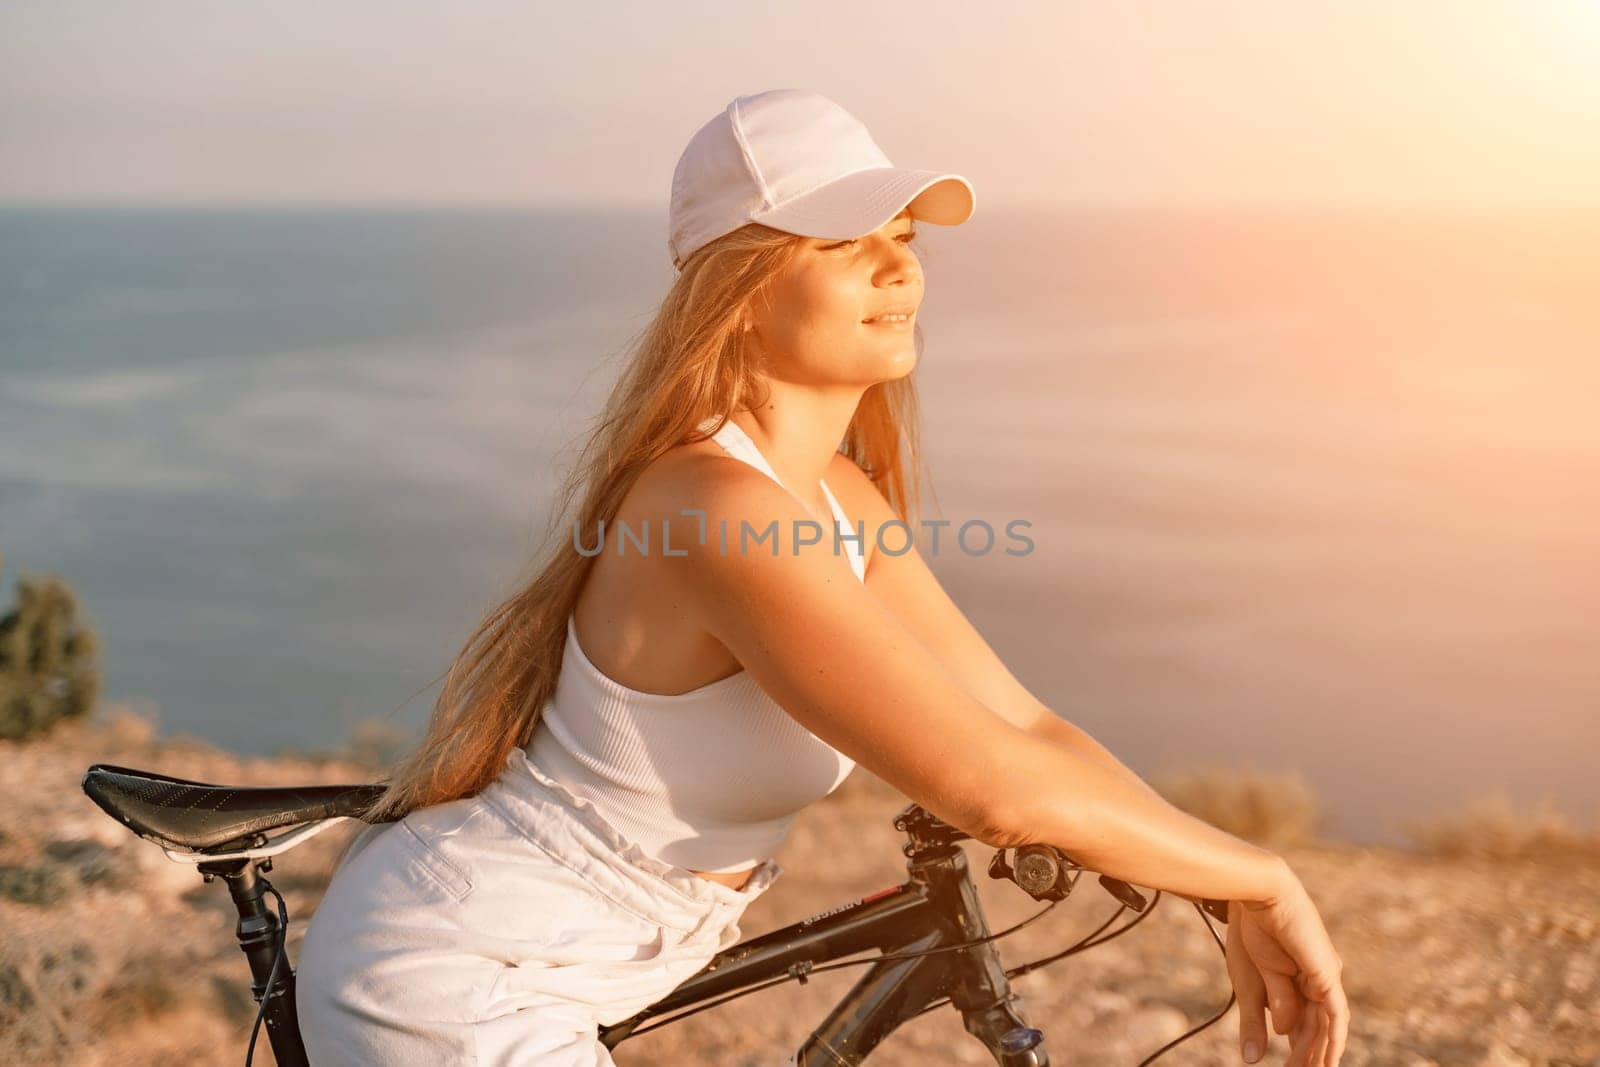 Woman travel bike sea. Happy woman cyclist sitting on her bike, enjoying the beautiful mountain and sea landscape, signifying the idea of an adventurous bike ride